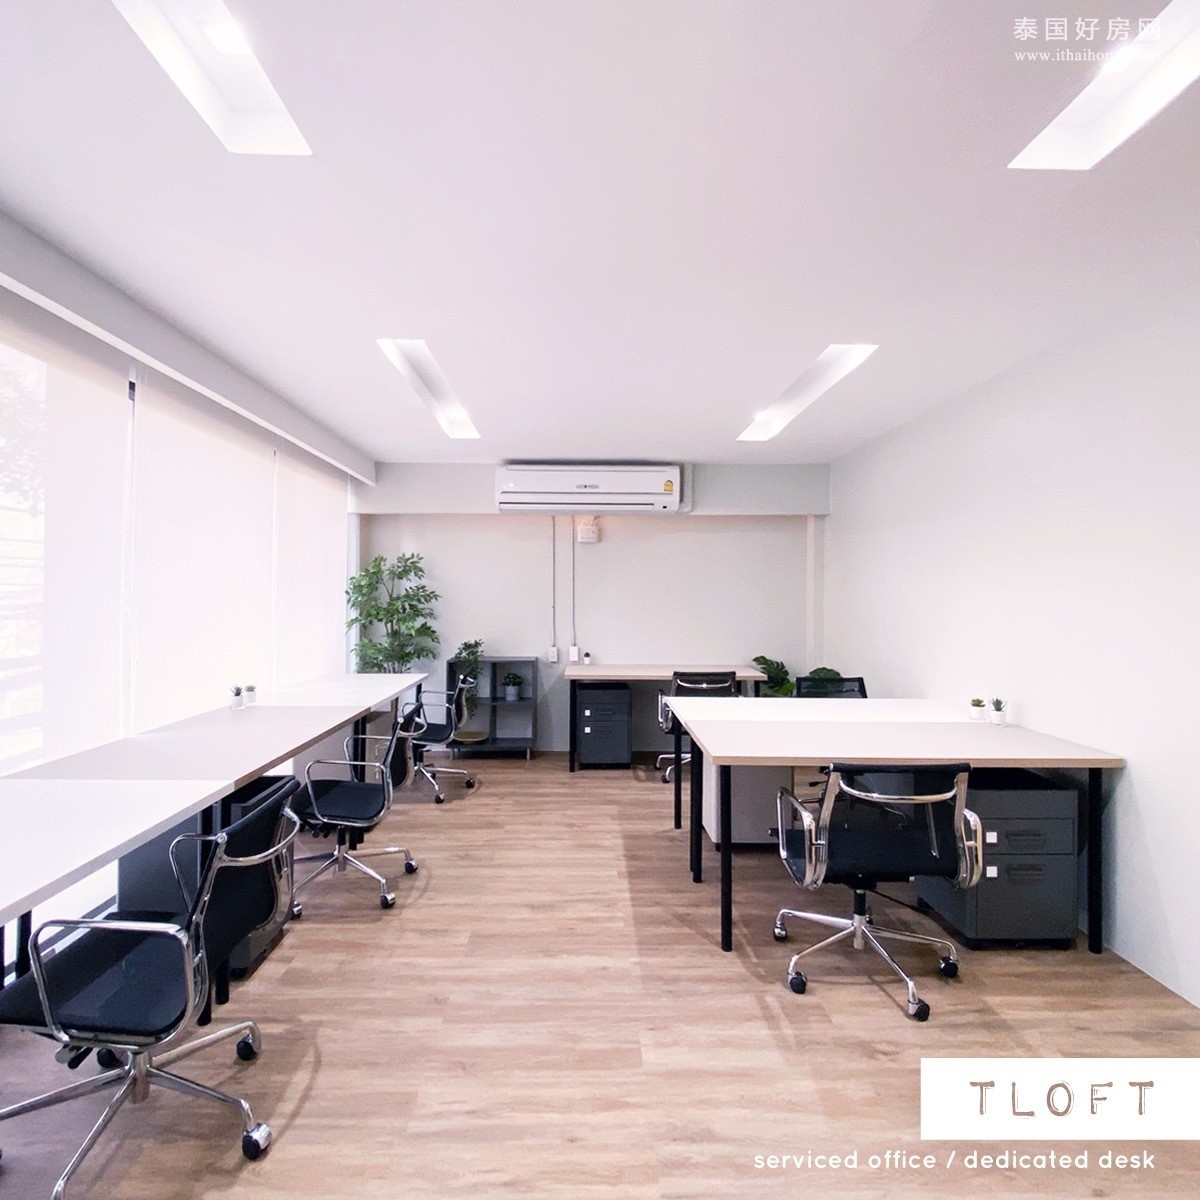 挽叻区 | Suriyawong - TLoft Co-Working Space 办公室出租 27平米 40,446泰铢/月